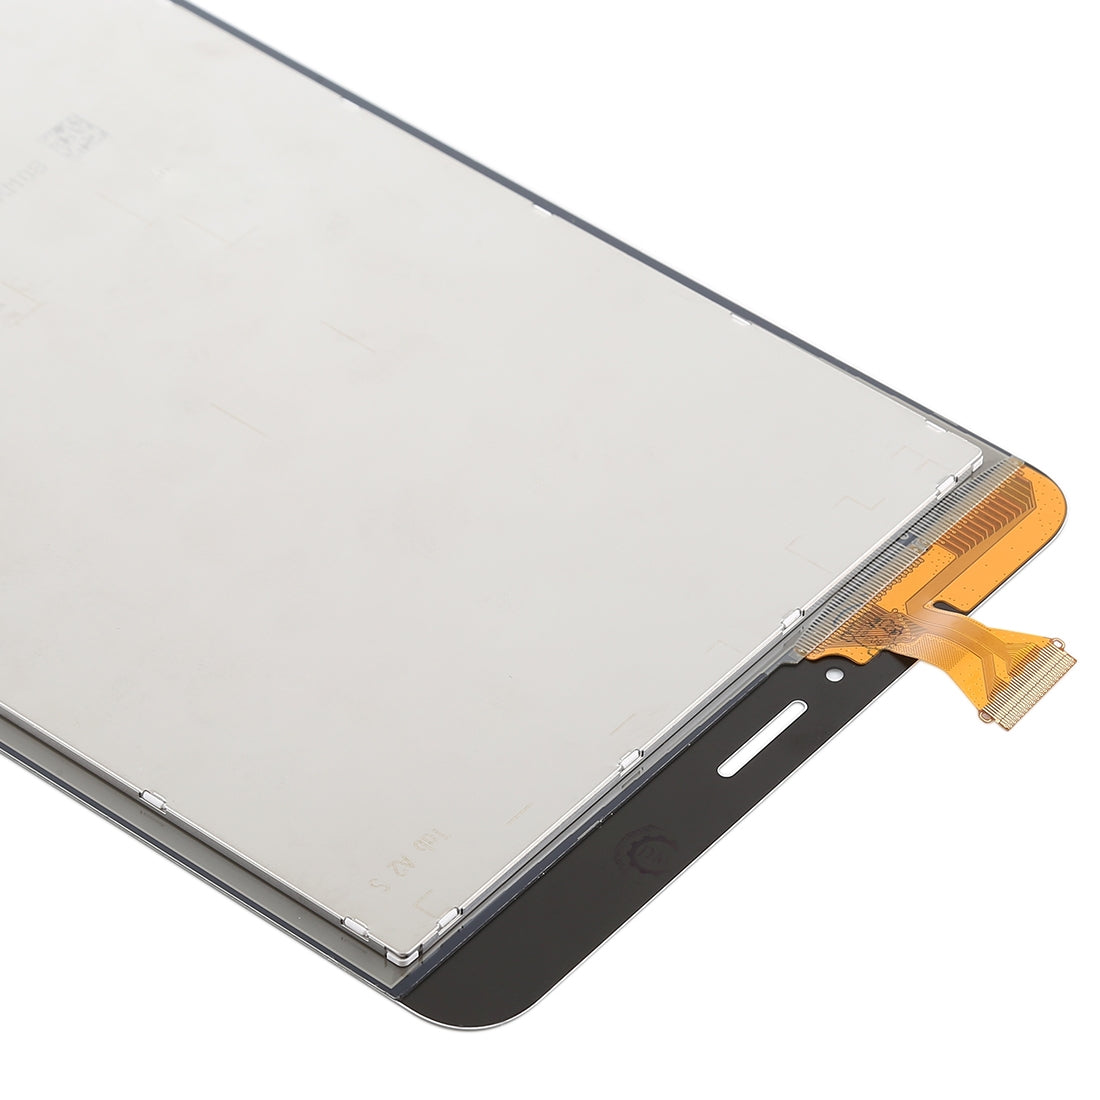 Pantalla LCD + Tactil Samsung Galaxy Tab E 8.0 T3777 (Versión 3G) Blanco